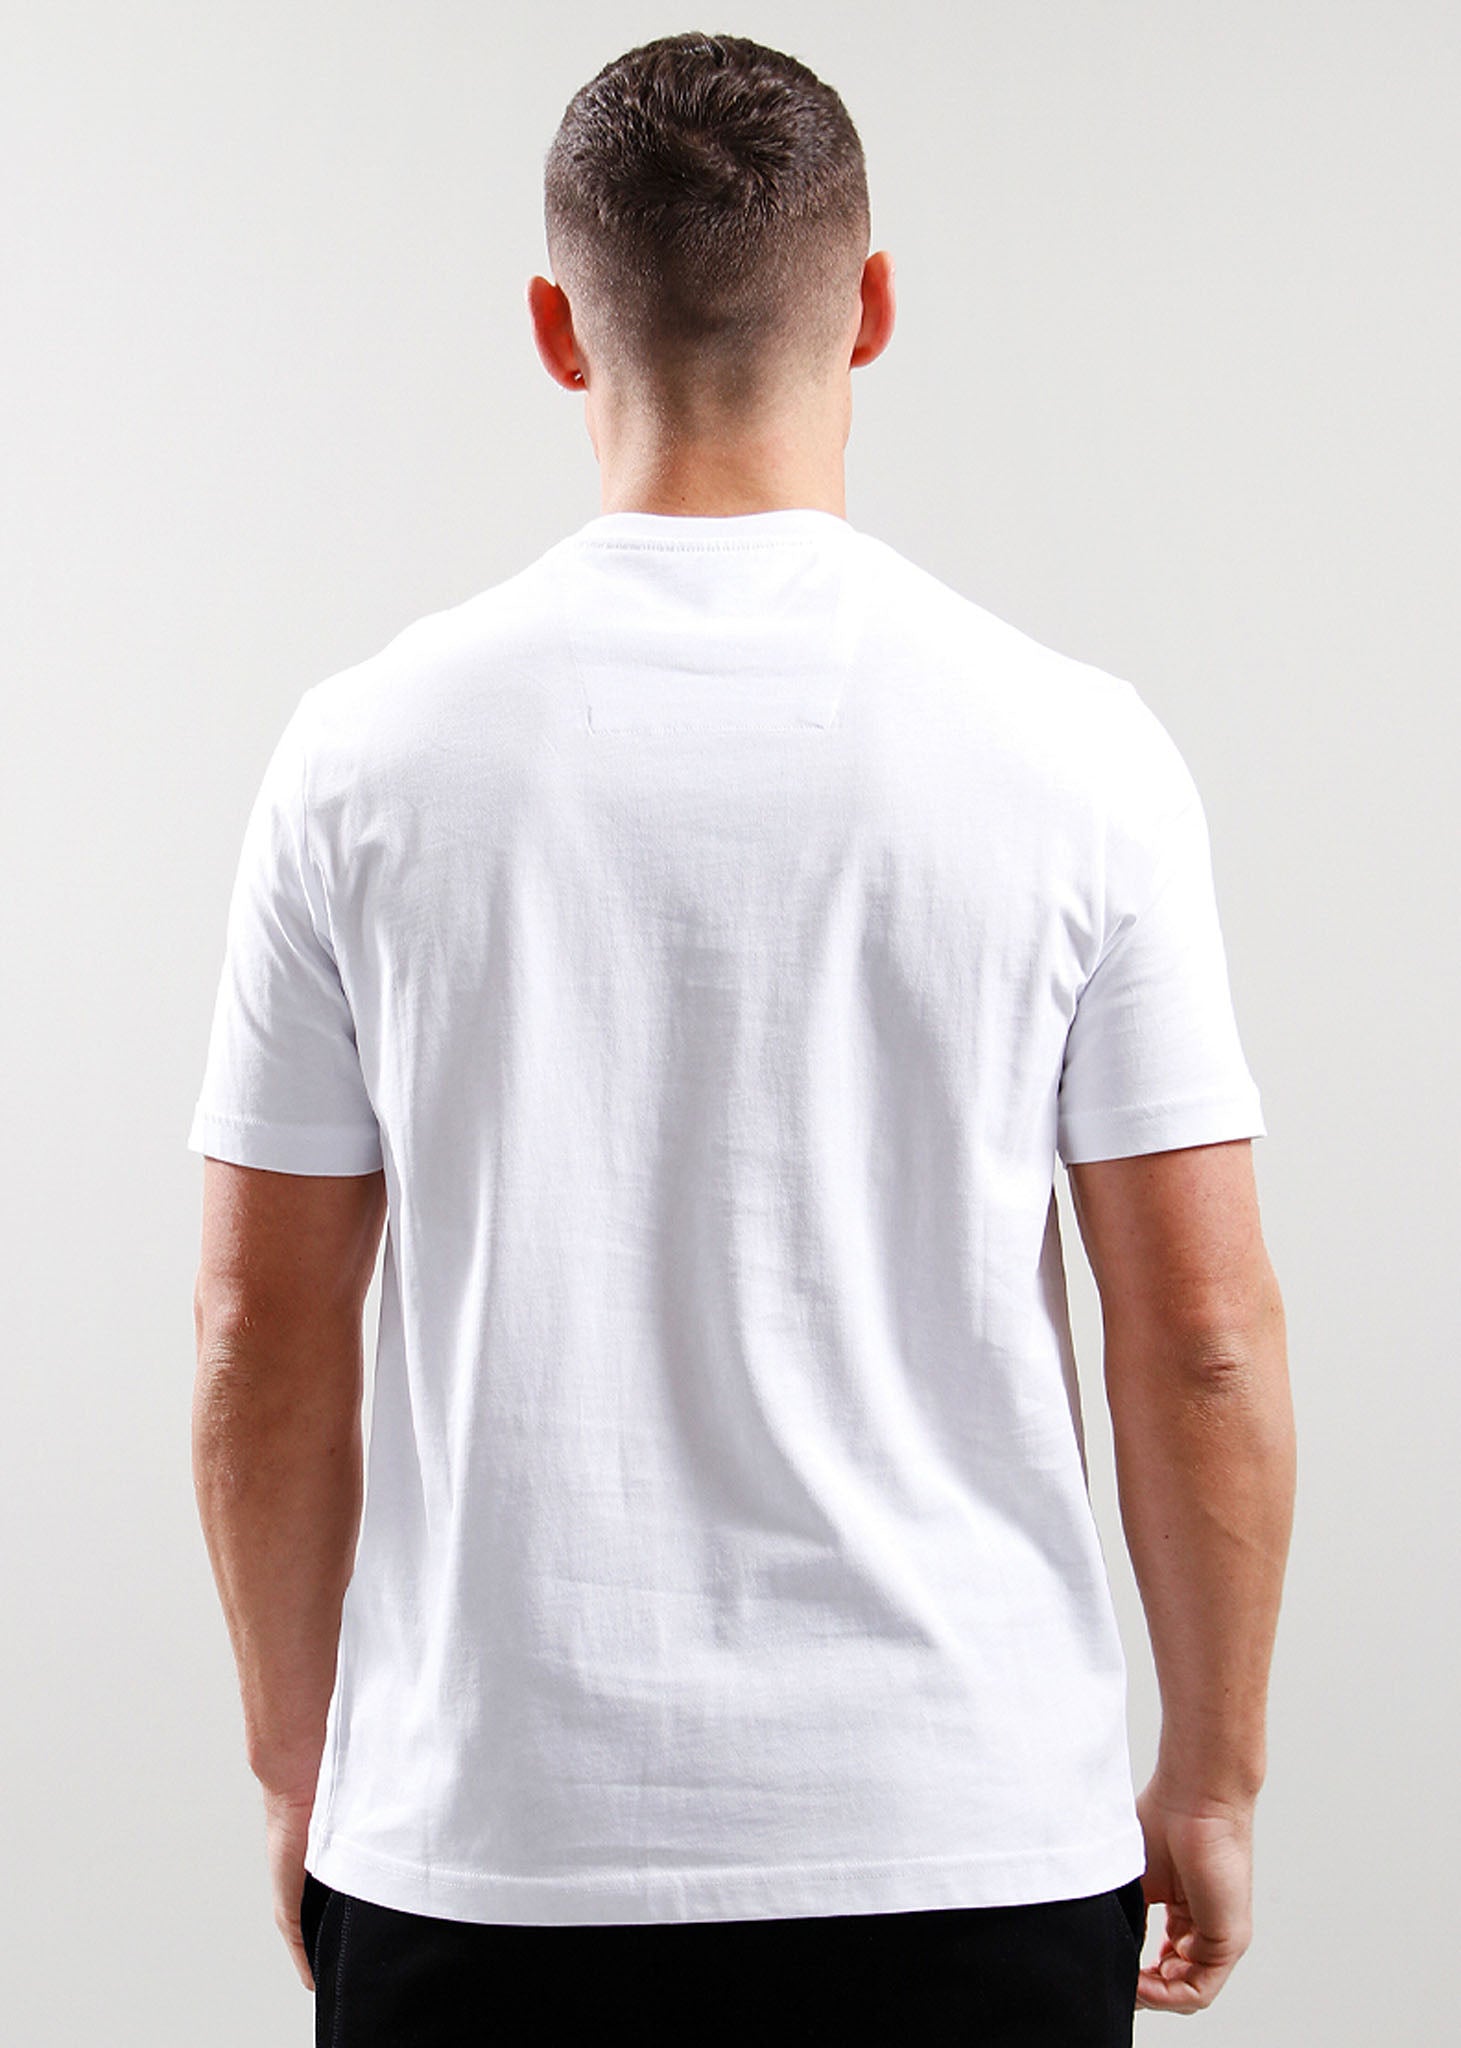 Marshall Artist T-shirts  Ombre t-shirt - white 